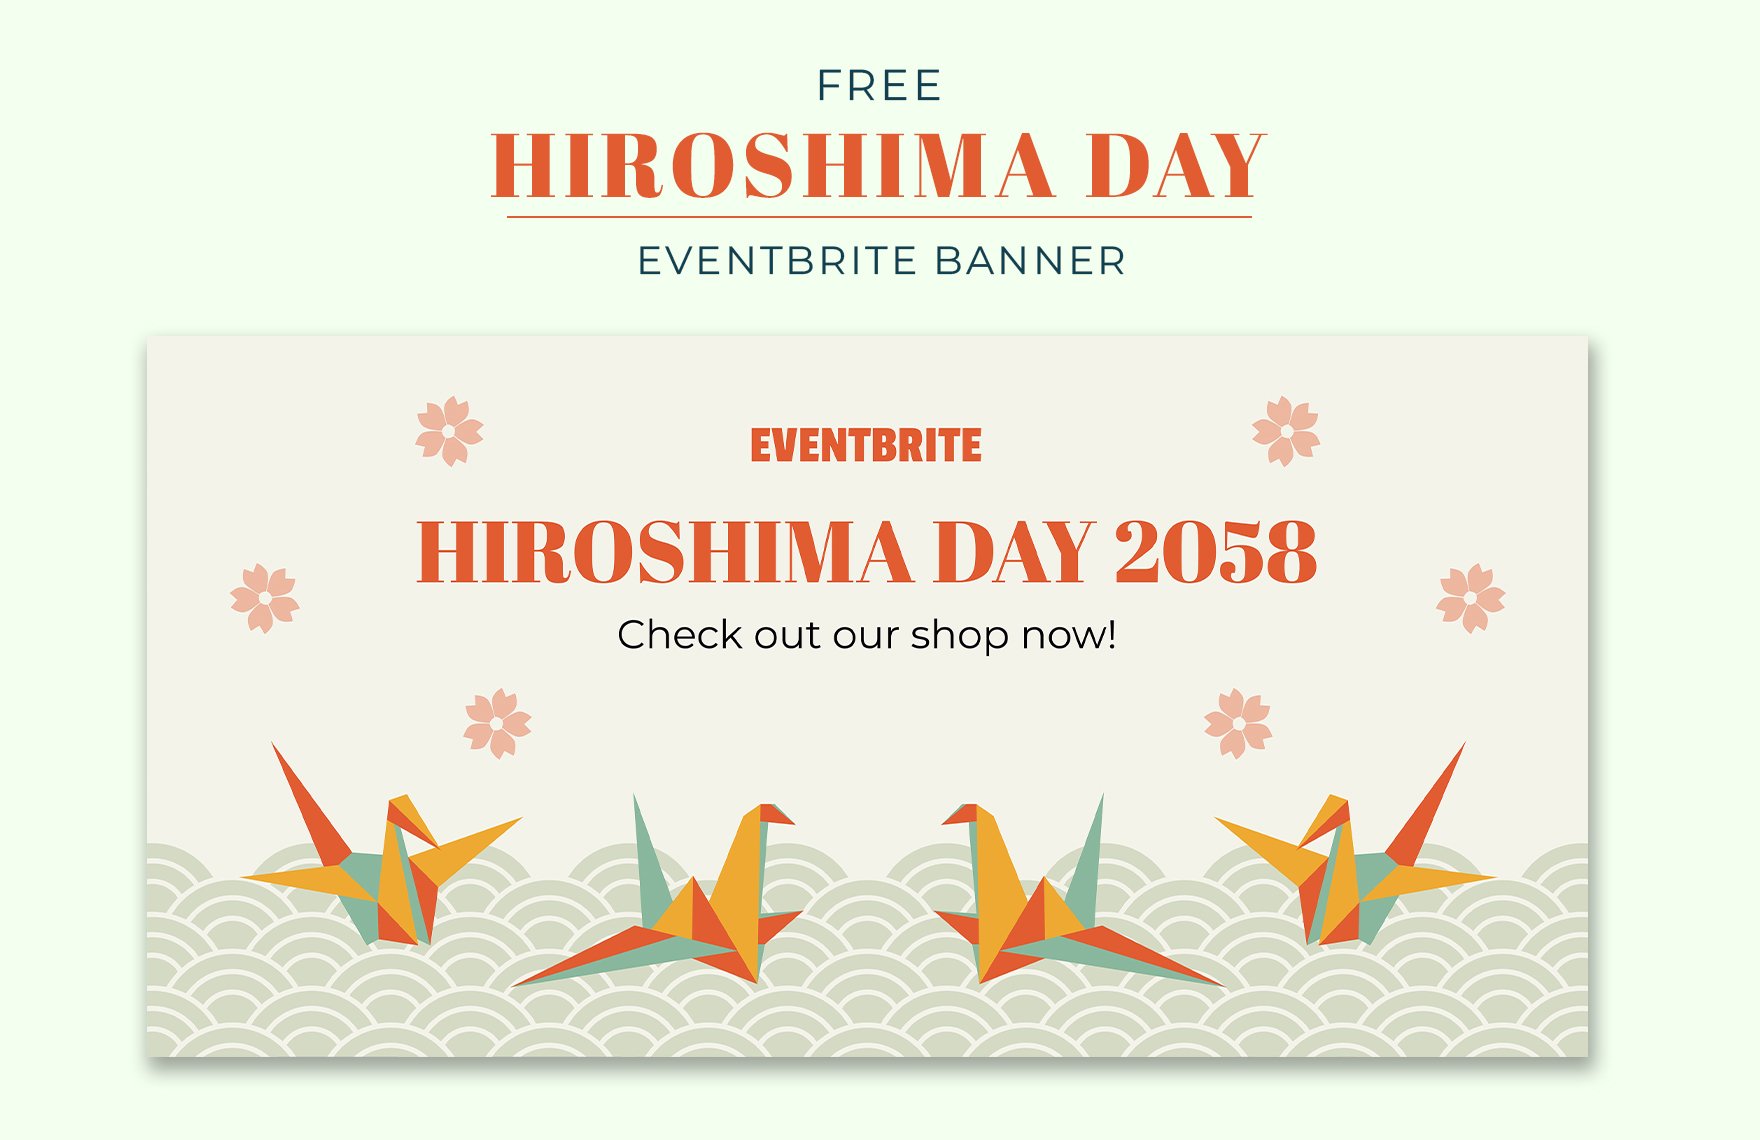 Free Hiroshima Day Eventbrite Banner